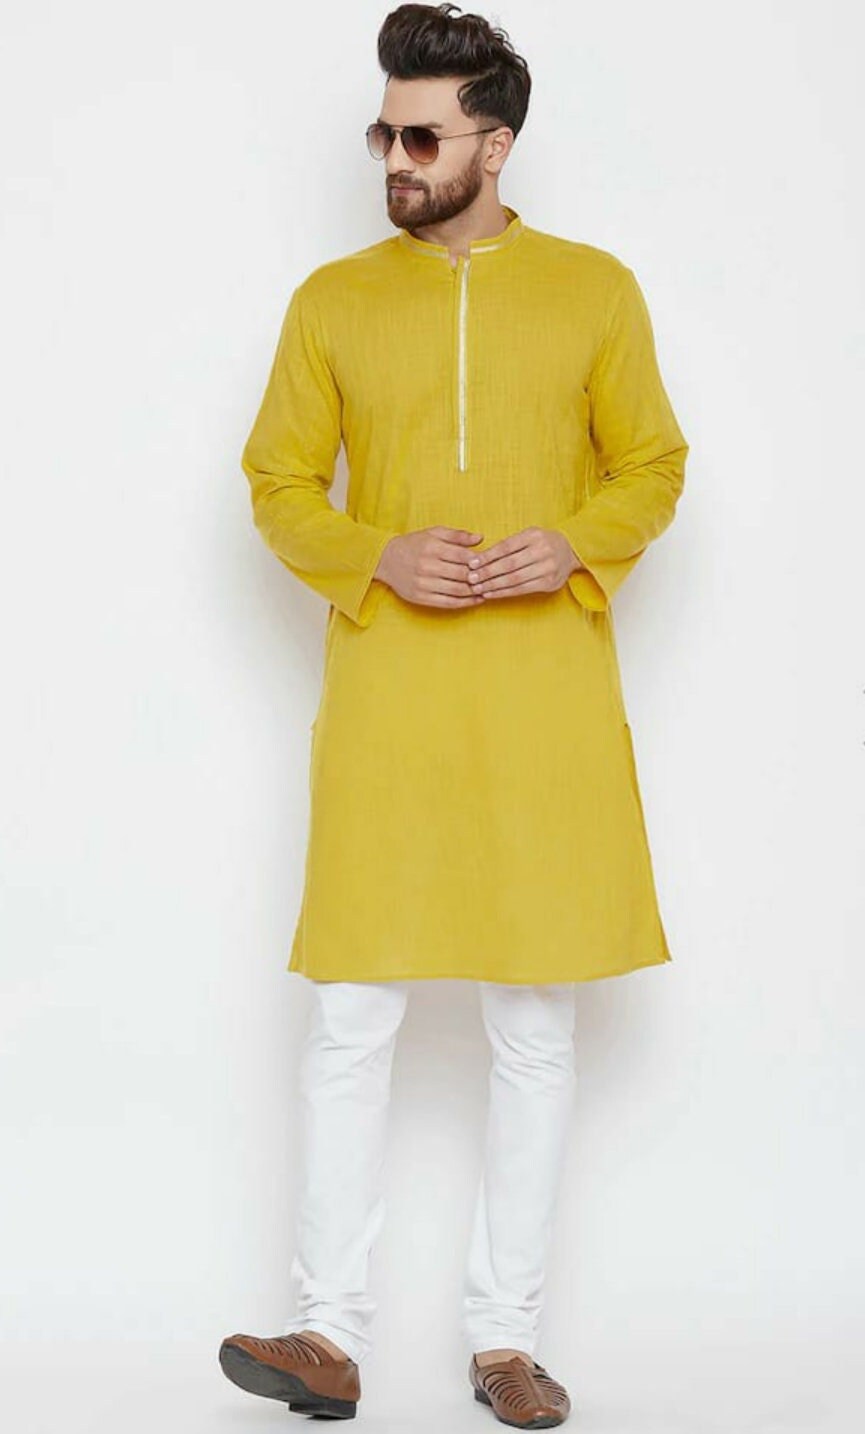 Clothing Mens Clothing Shirts & Tees New indian men's stylist simpal kurta designer kurta 100%cotton ethnic kurta good and best quality color yellow all size availeble 